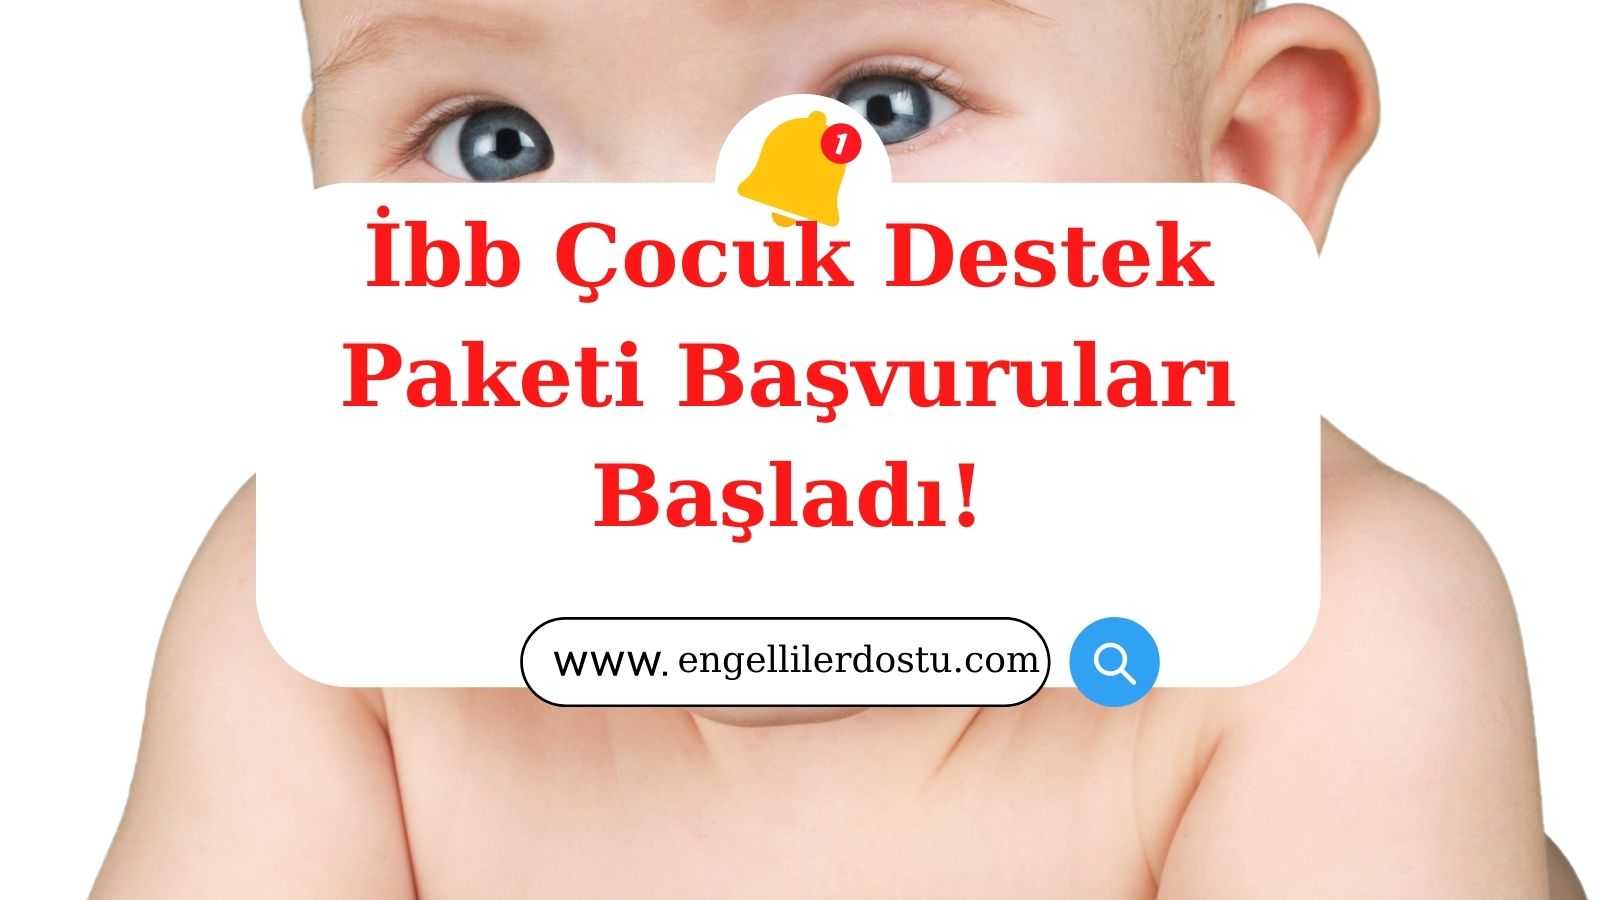 İbb Yenidoğan Paketi! İbb Anne Bebek Destek Paketi